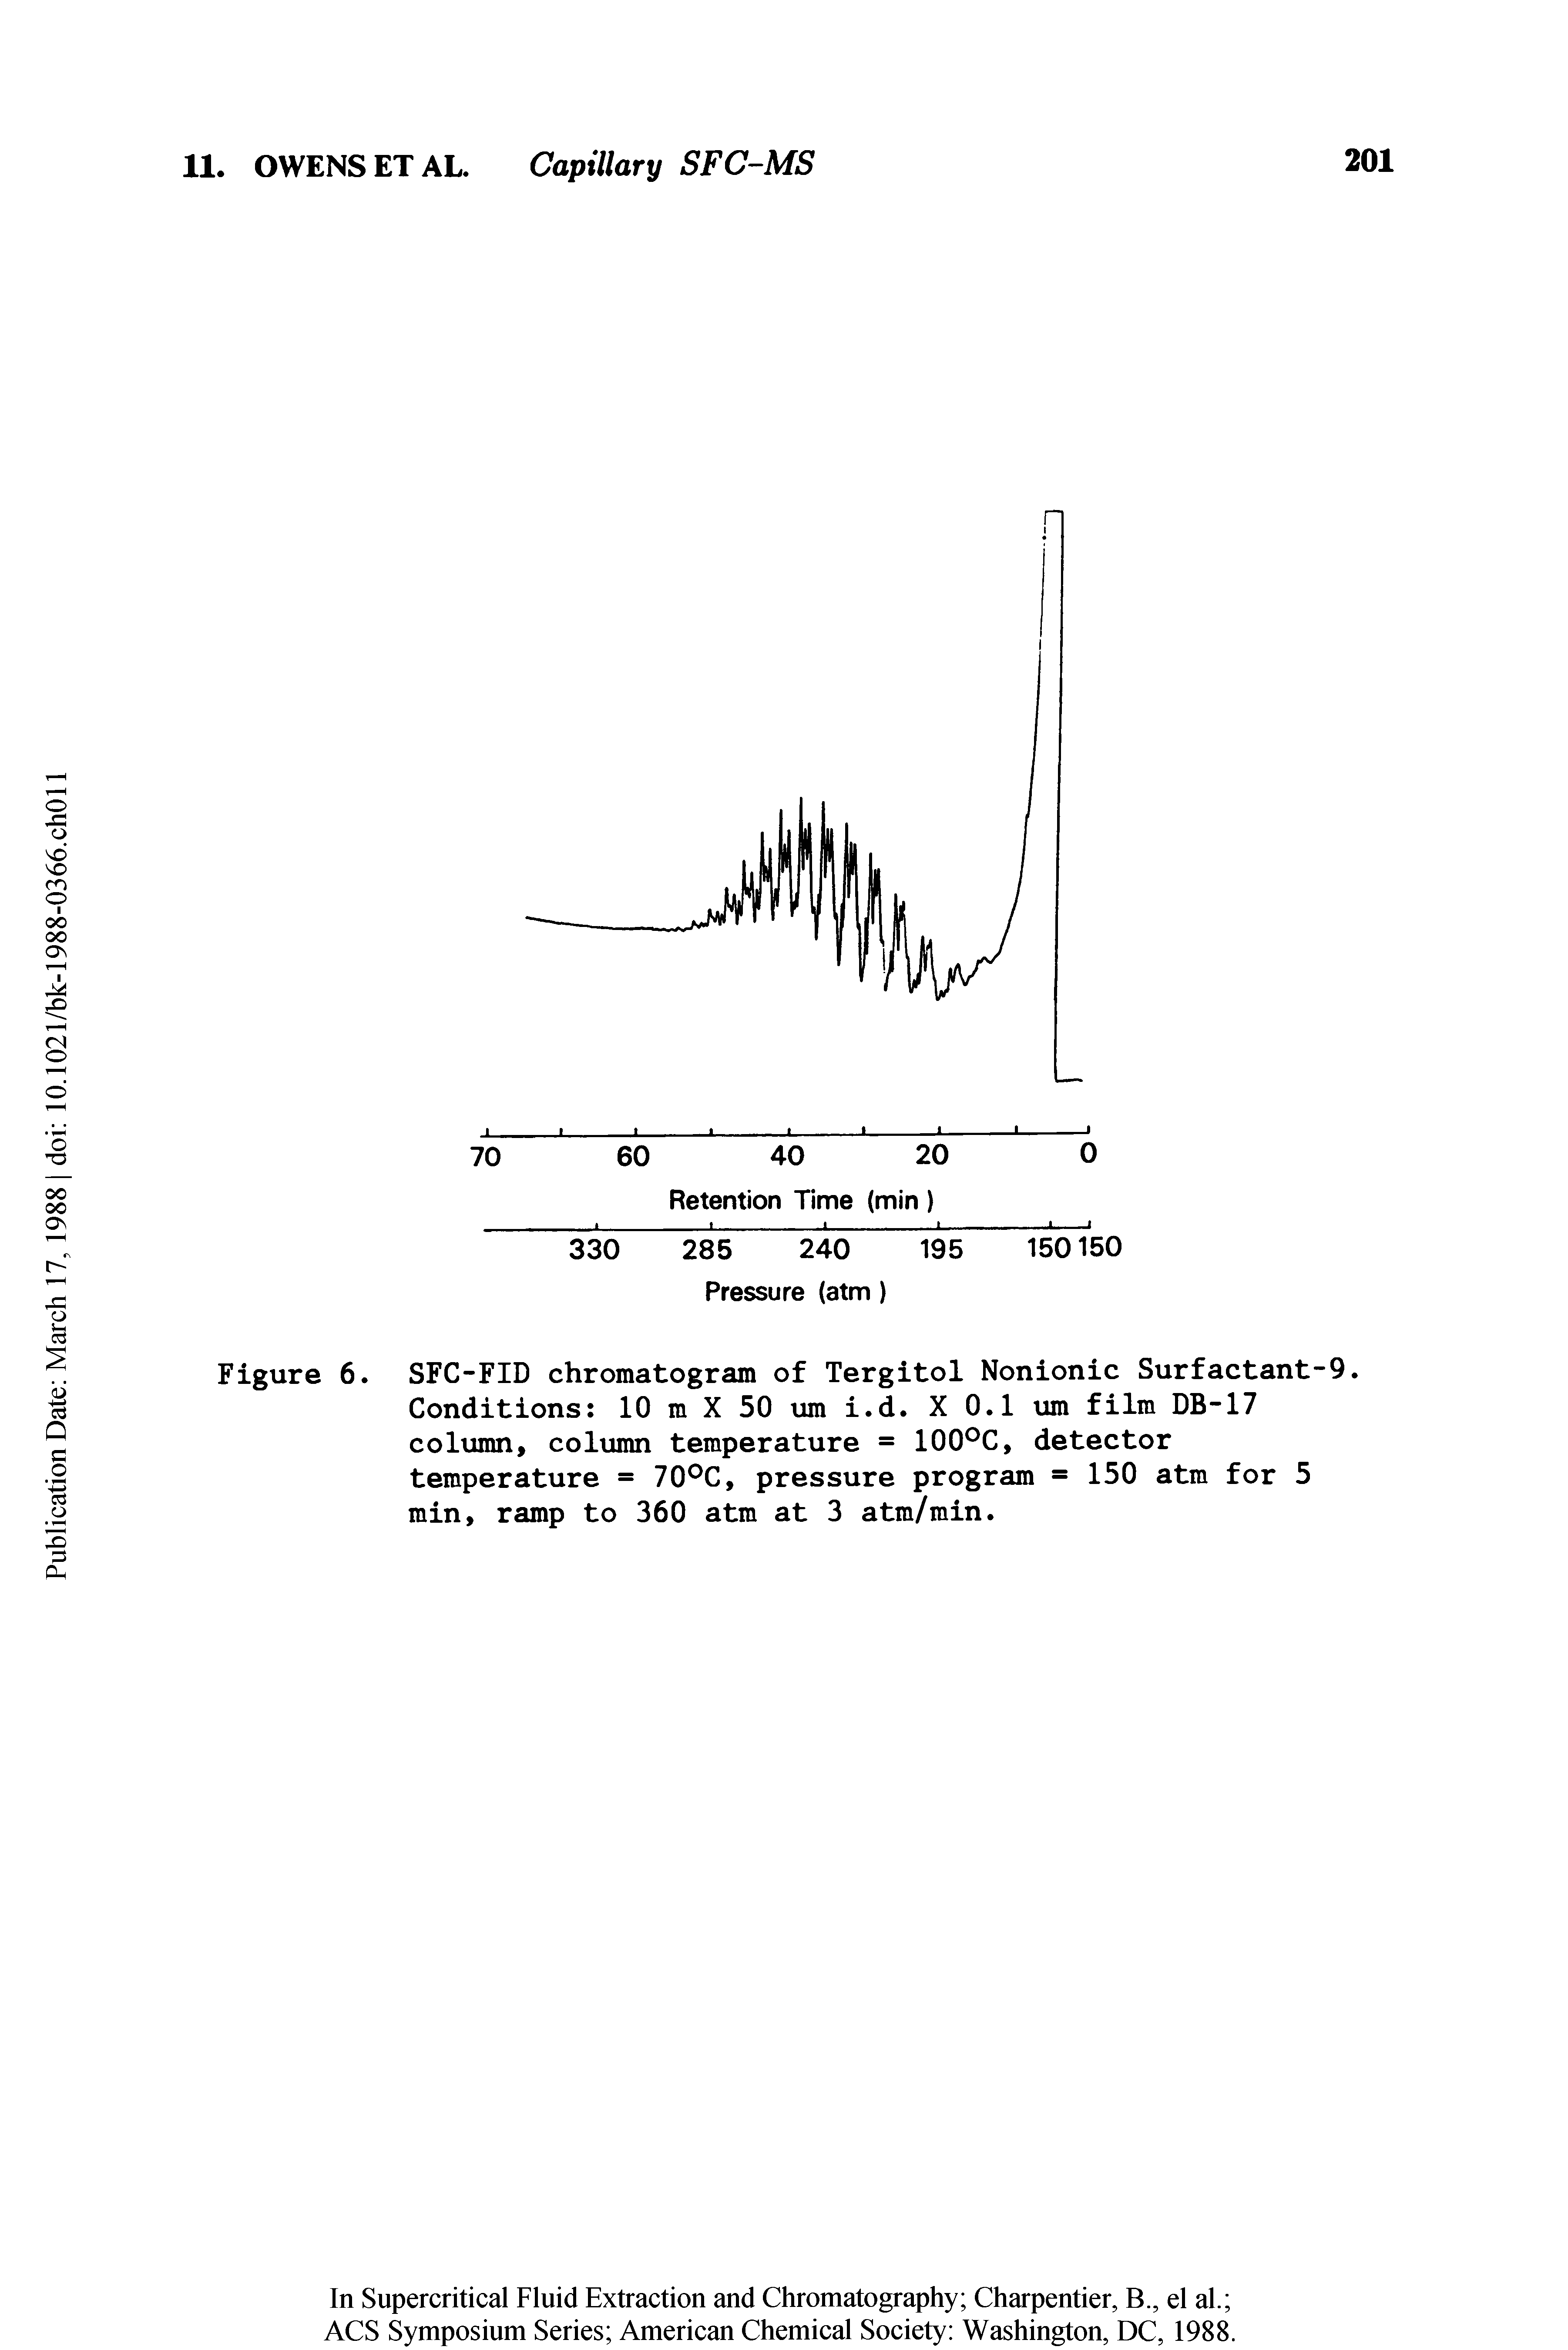 Figure 6. SFC-FID chromatogram of Tergitol Nonionic Surfactant-9. Conditions 10 m X 50 urn i.d. X 0.1 tim film DB-17 column, column temperature = lOO C, detector temperature = 70 C, pressure program = 150 atm for 5 min, ramp to 360 atm at 3 atm/min.